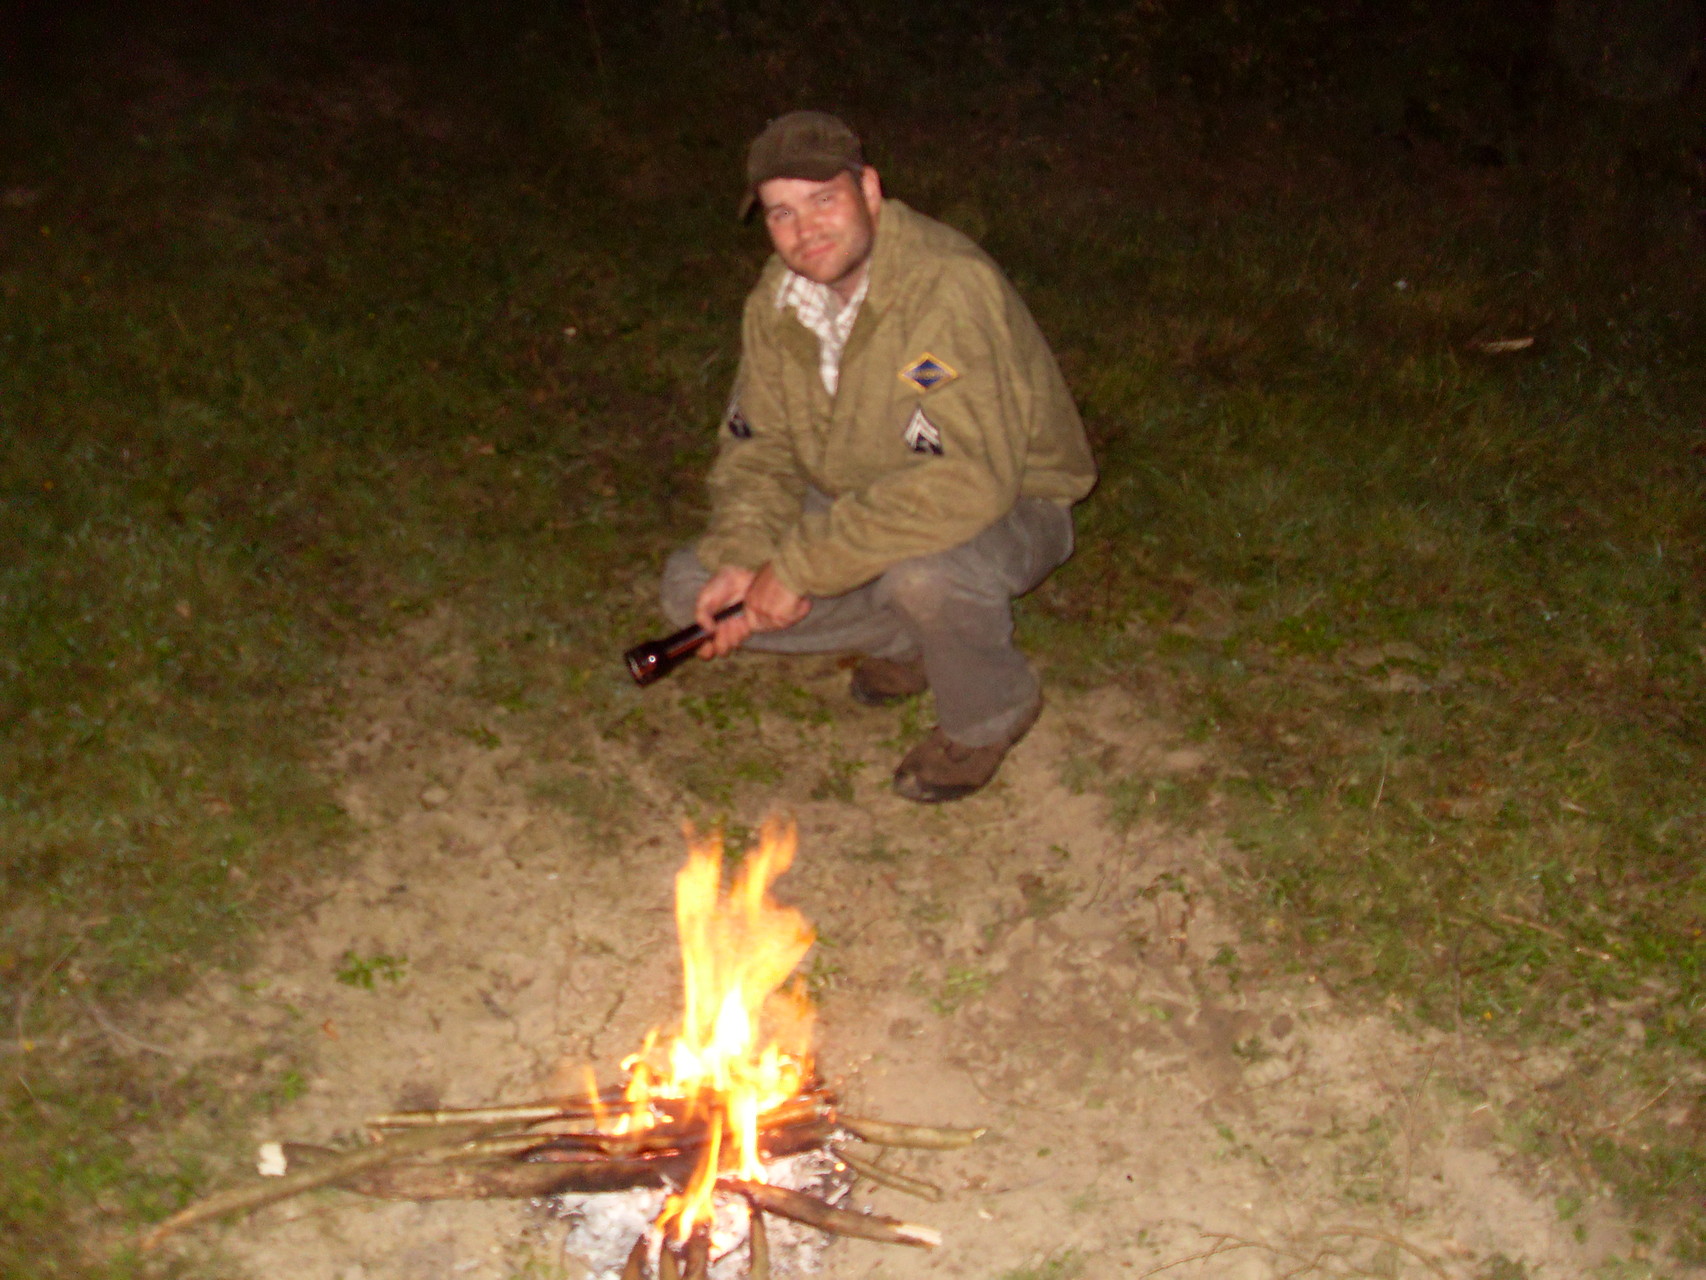 Larry enjoys the fire